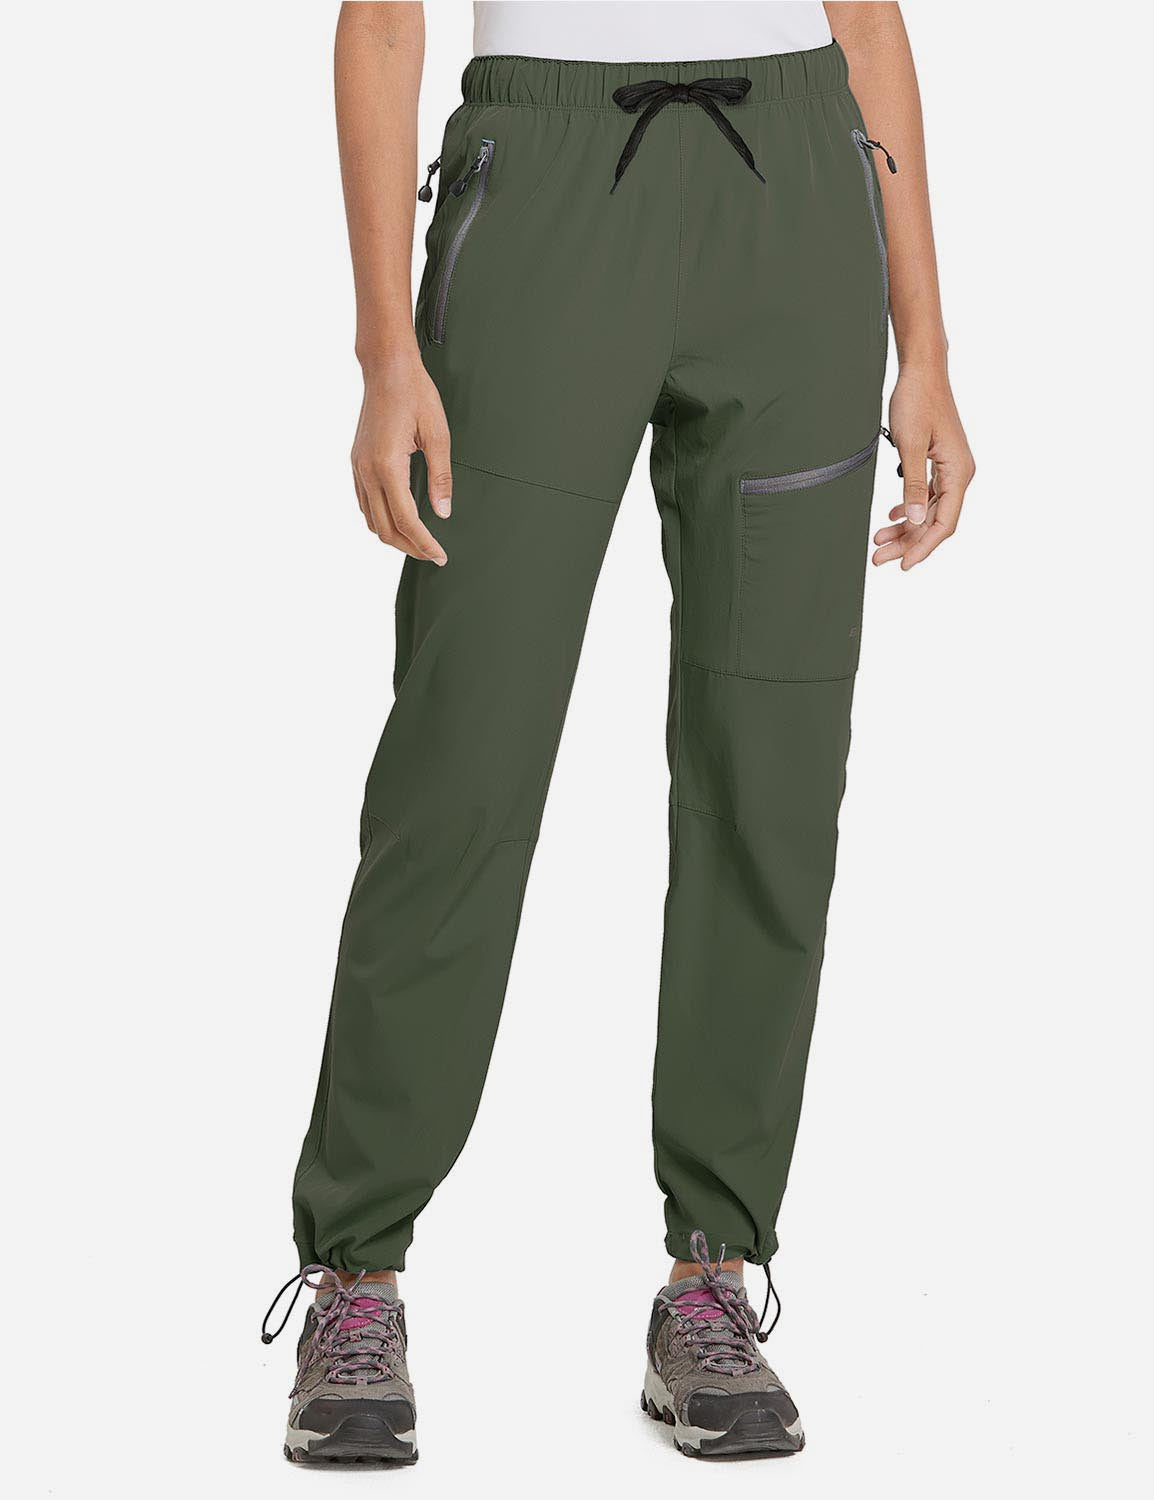 Buy BALEAF Women's Joggers Lightweight Hiking Pants High Waist 5 Zipper  Pockets Quick Dry Travel Athletic UPF50+, Navy Blue 25.5'' Inseam, Large at